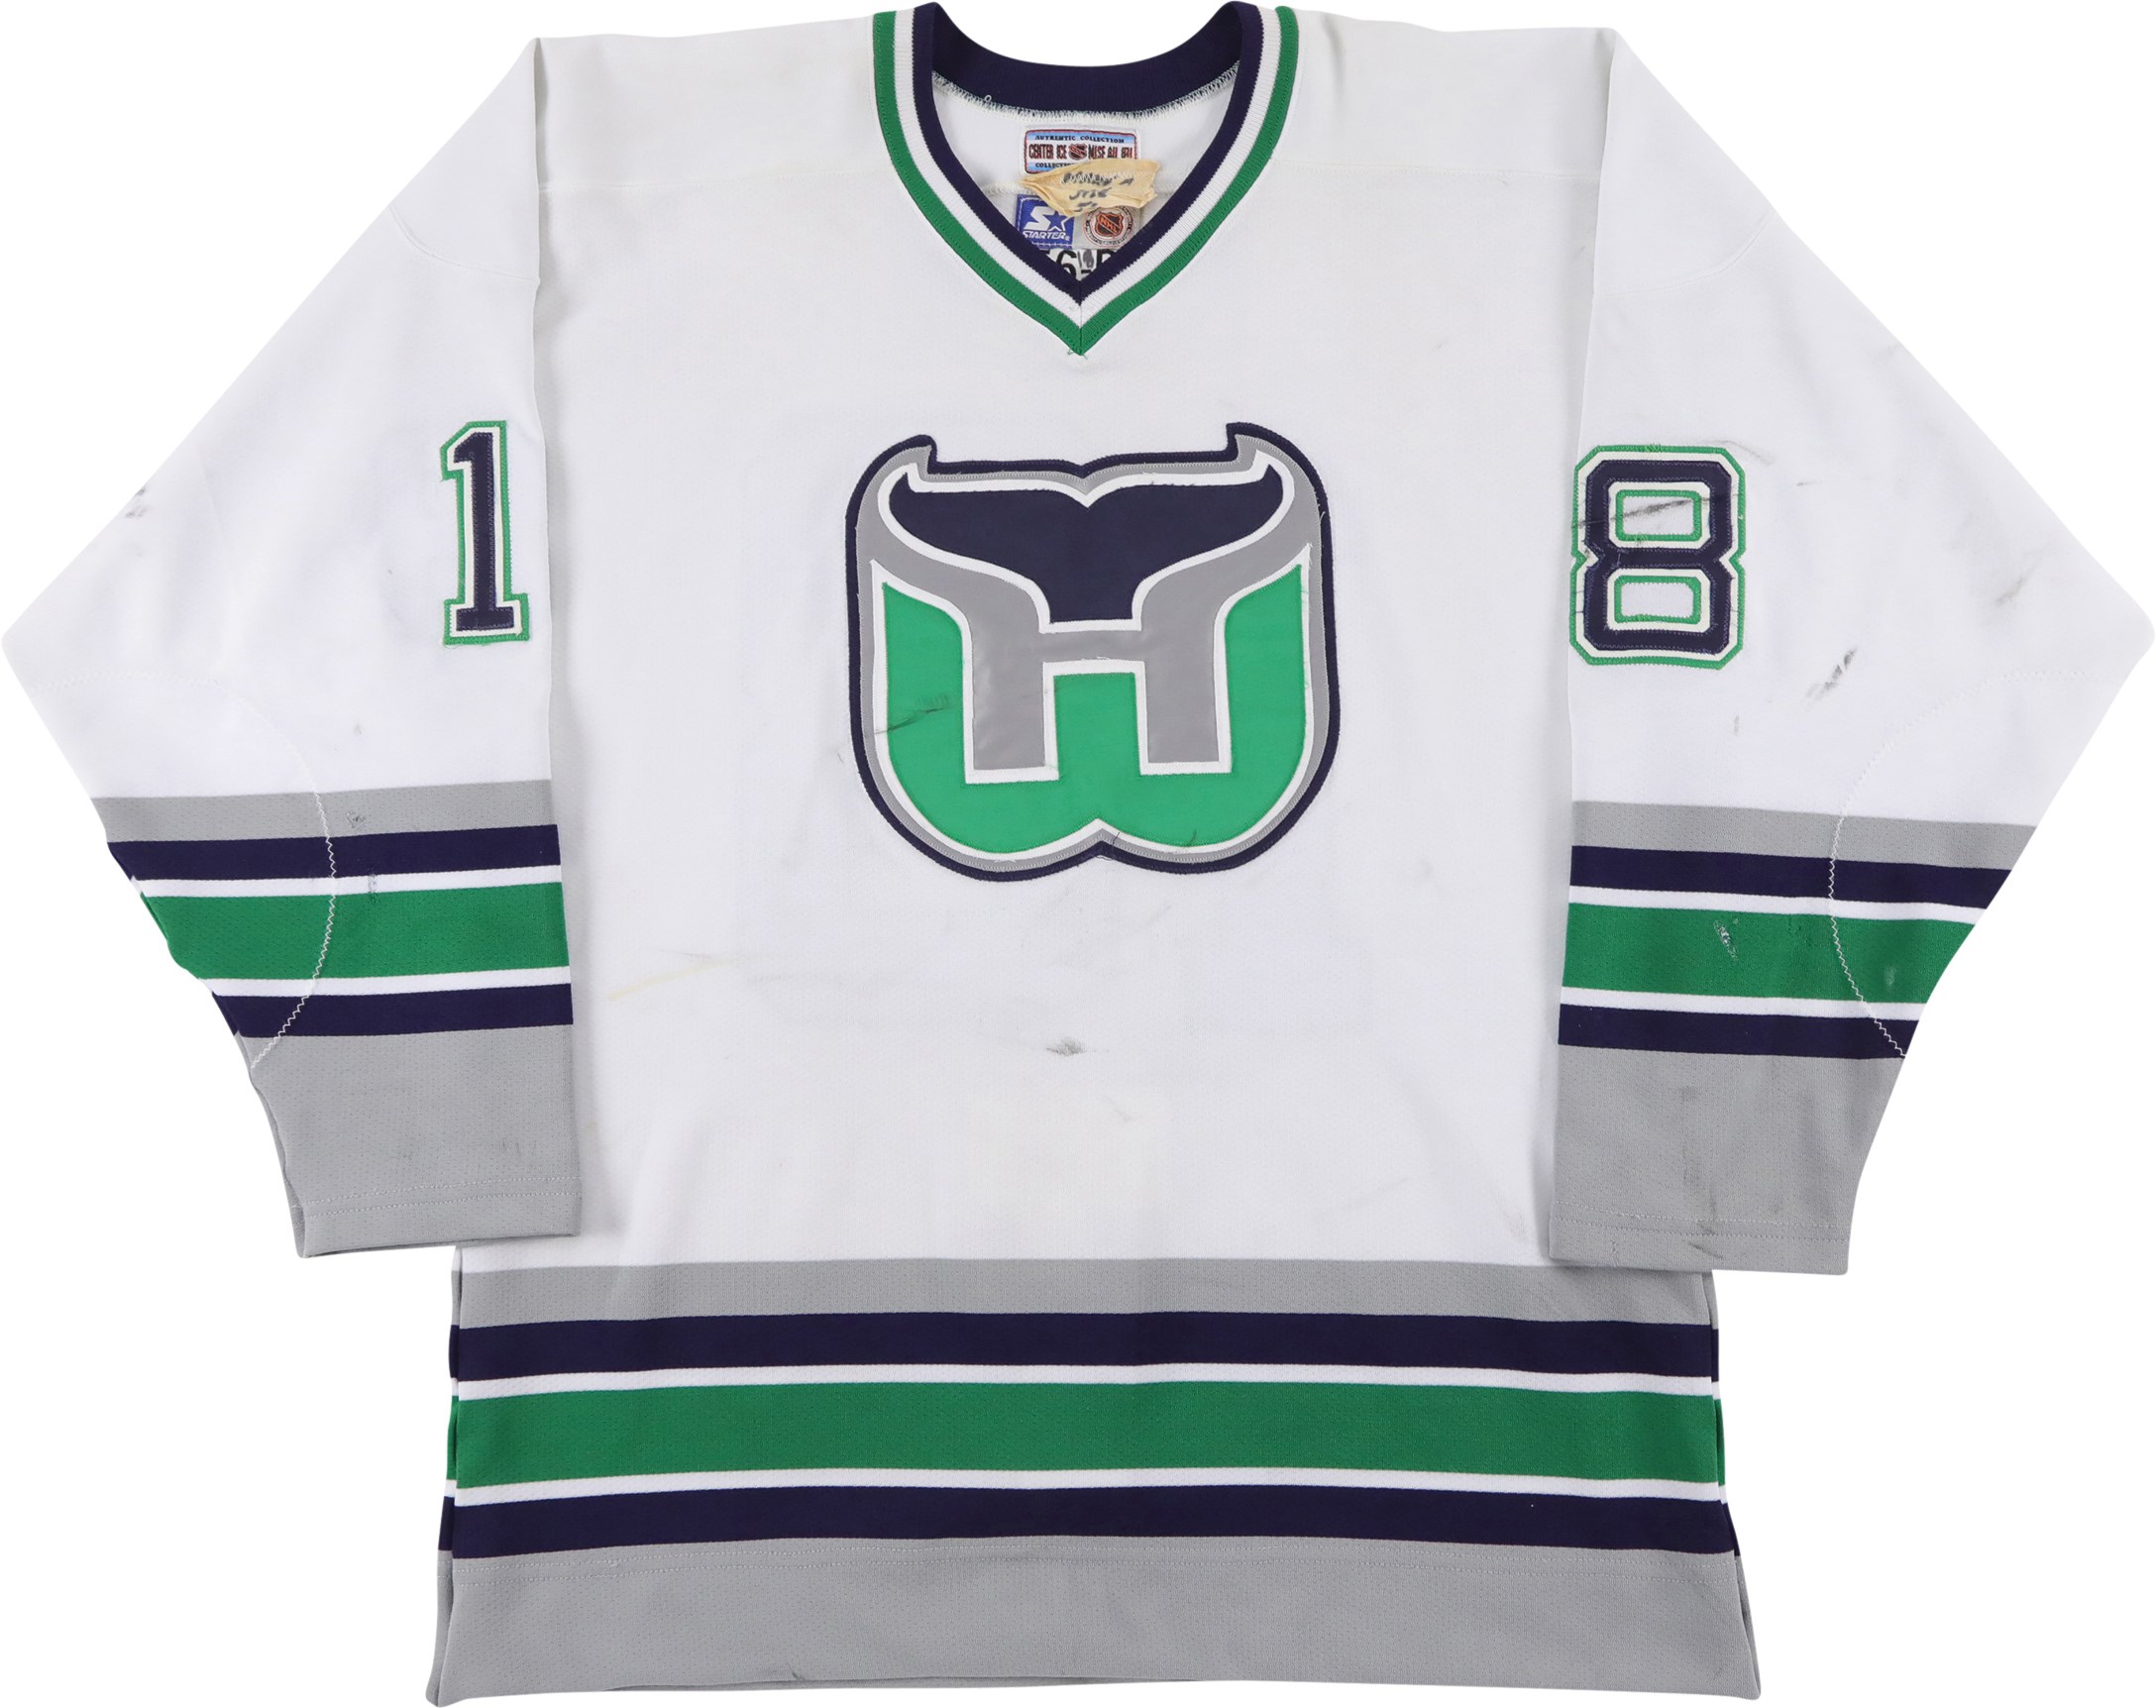 Hockey - 1996-97 Robert Kron Hartford Whalers Game Worn Jersey - Whalers Final Season (Team-Sourced)